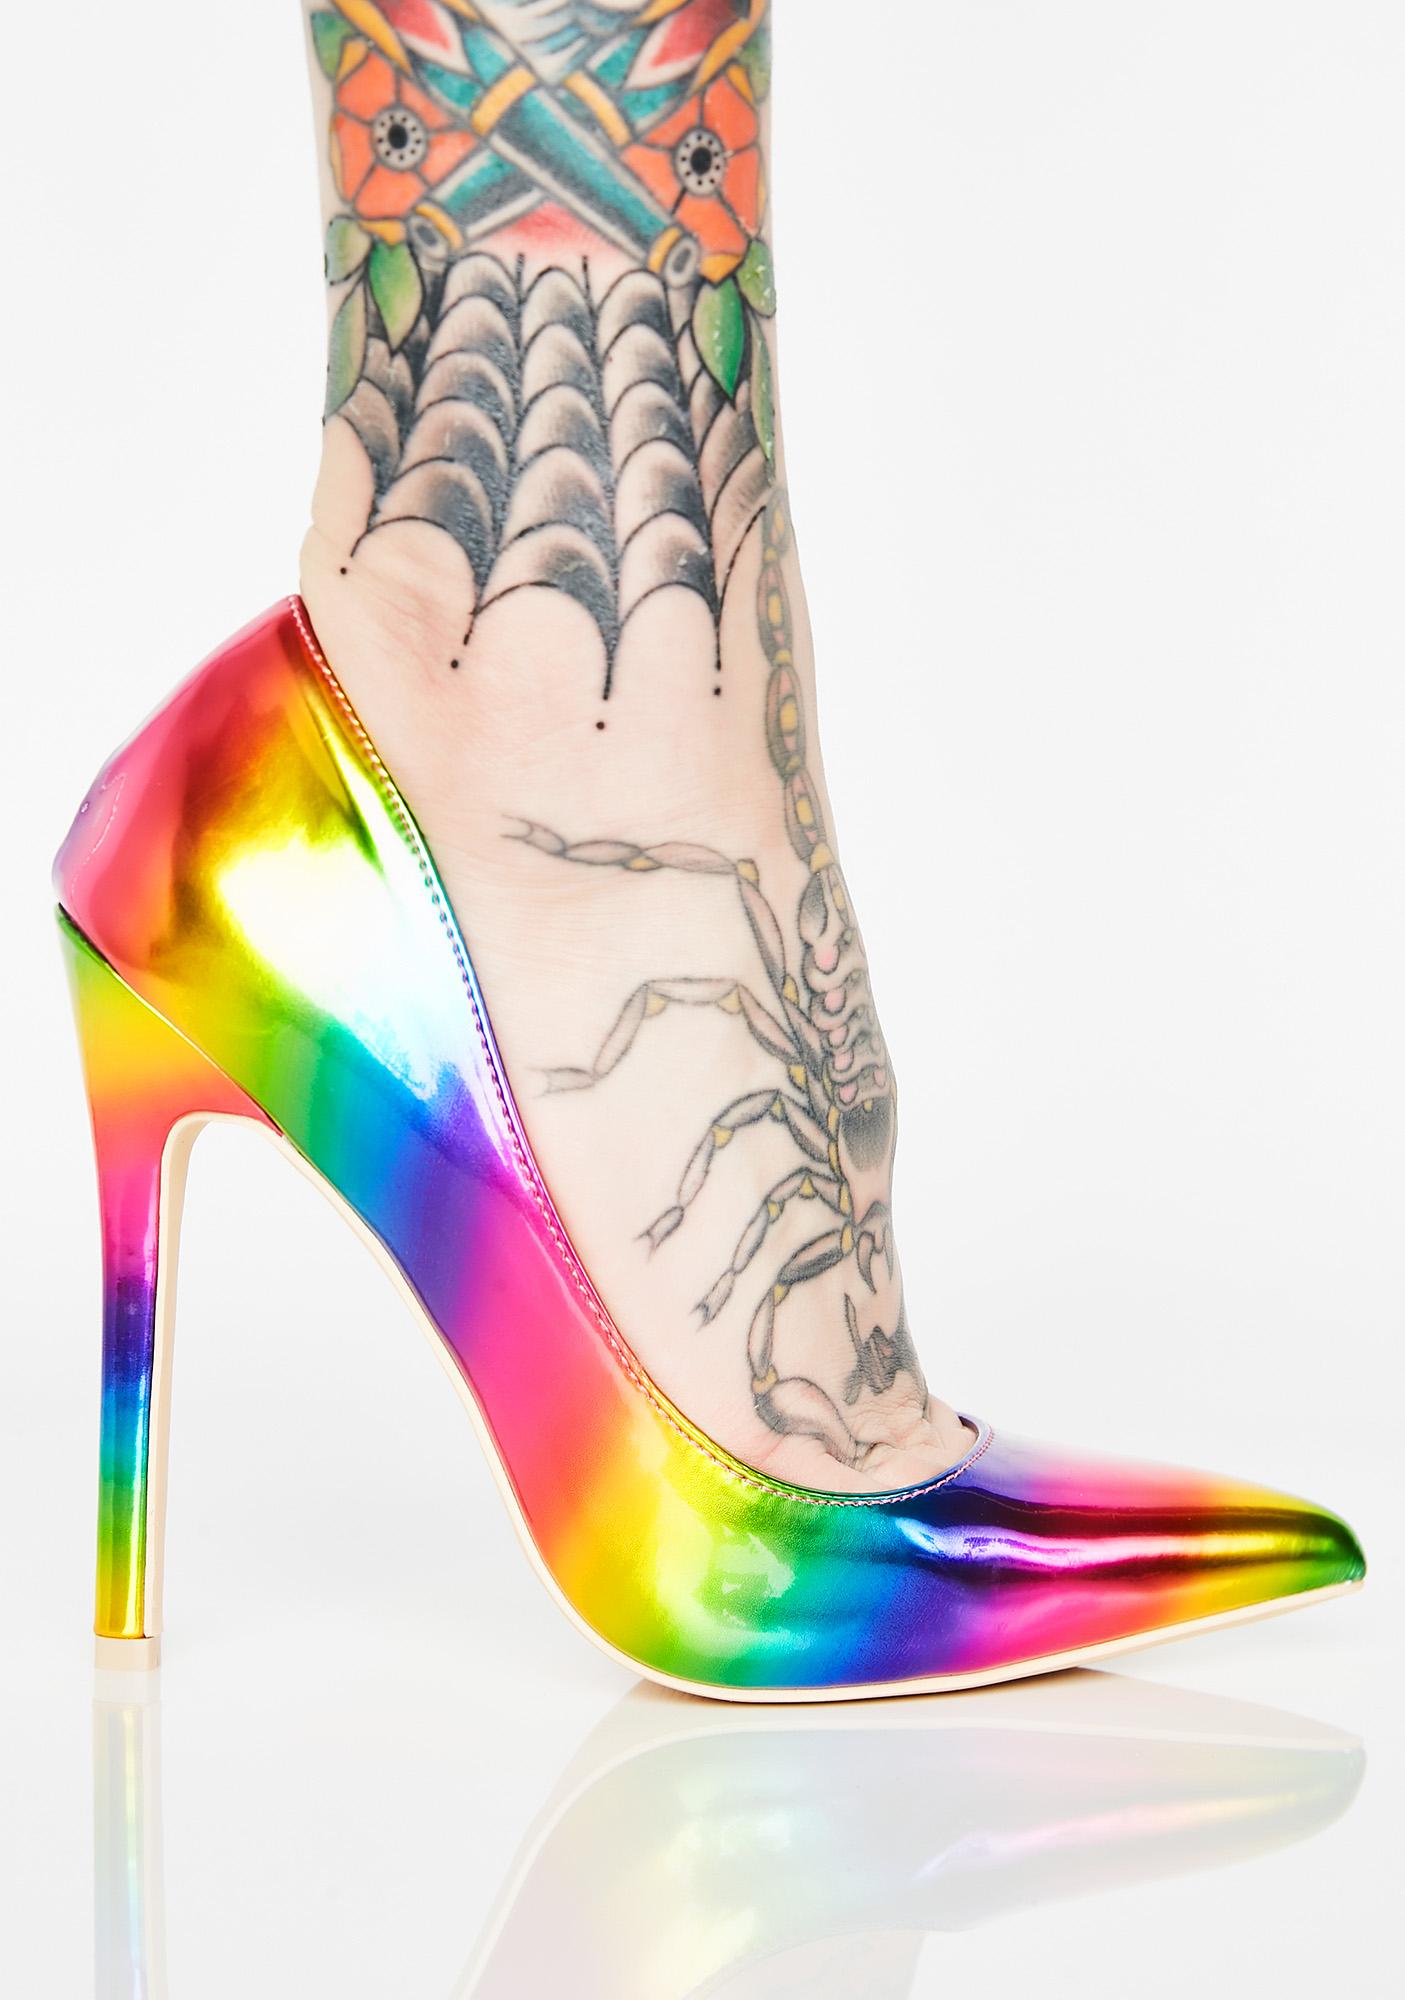 rainbow pumps high heels